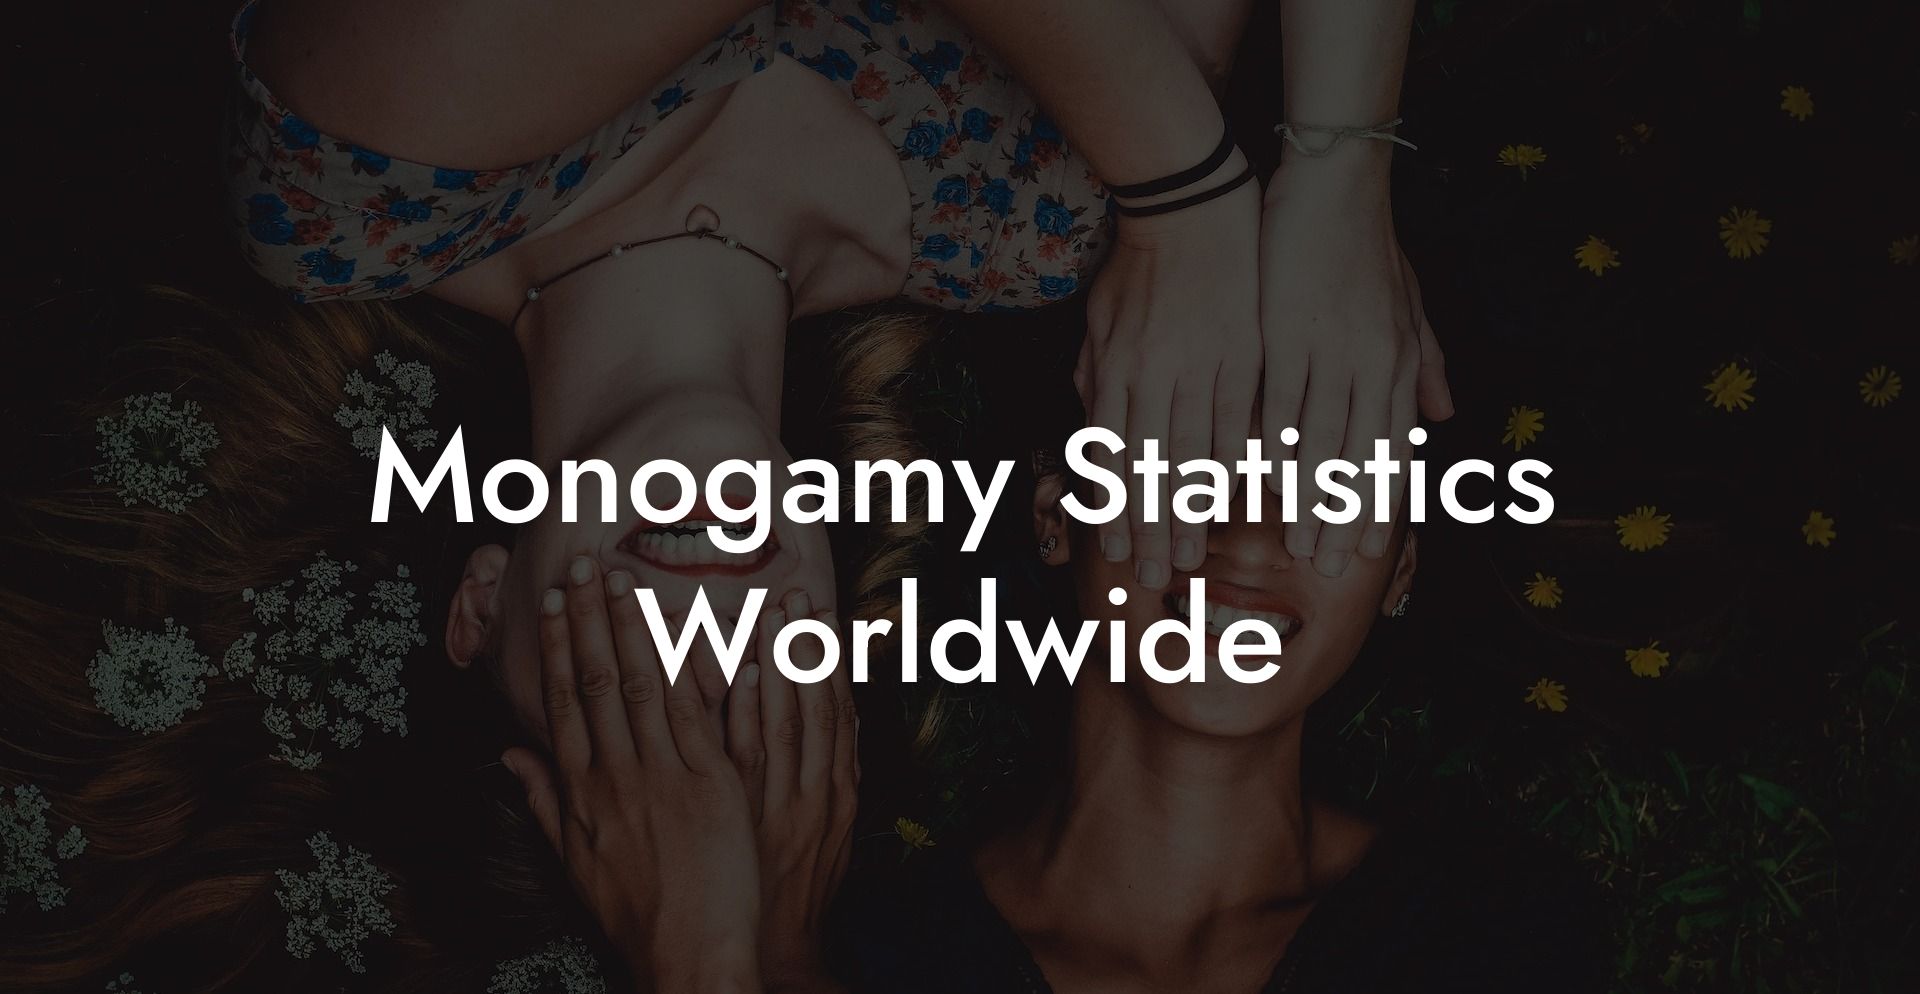 Monogamy Statistics Worldwide